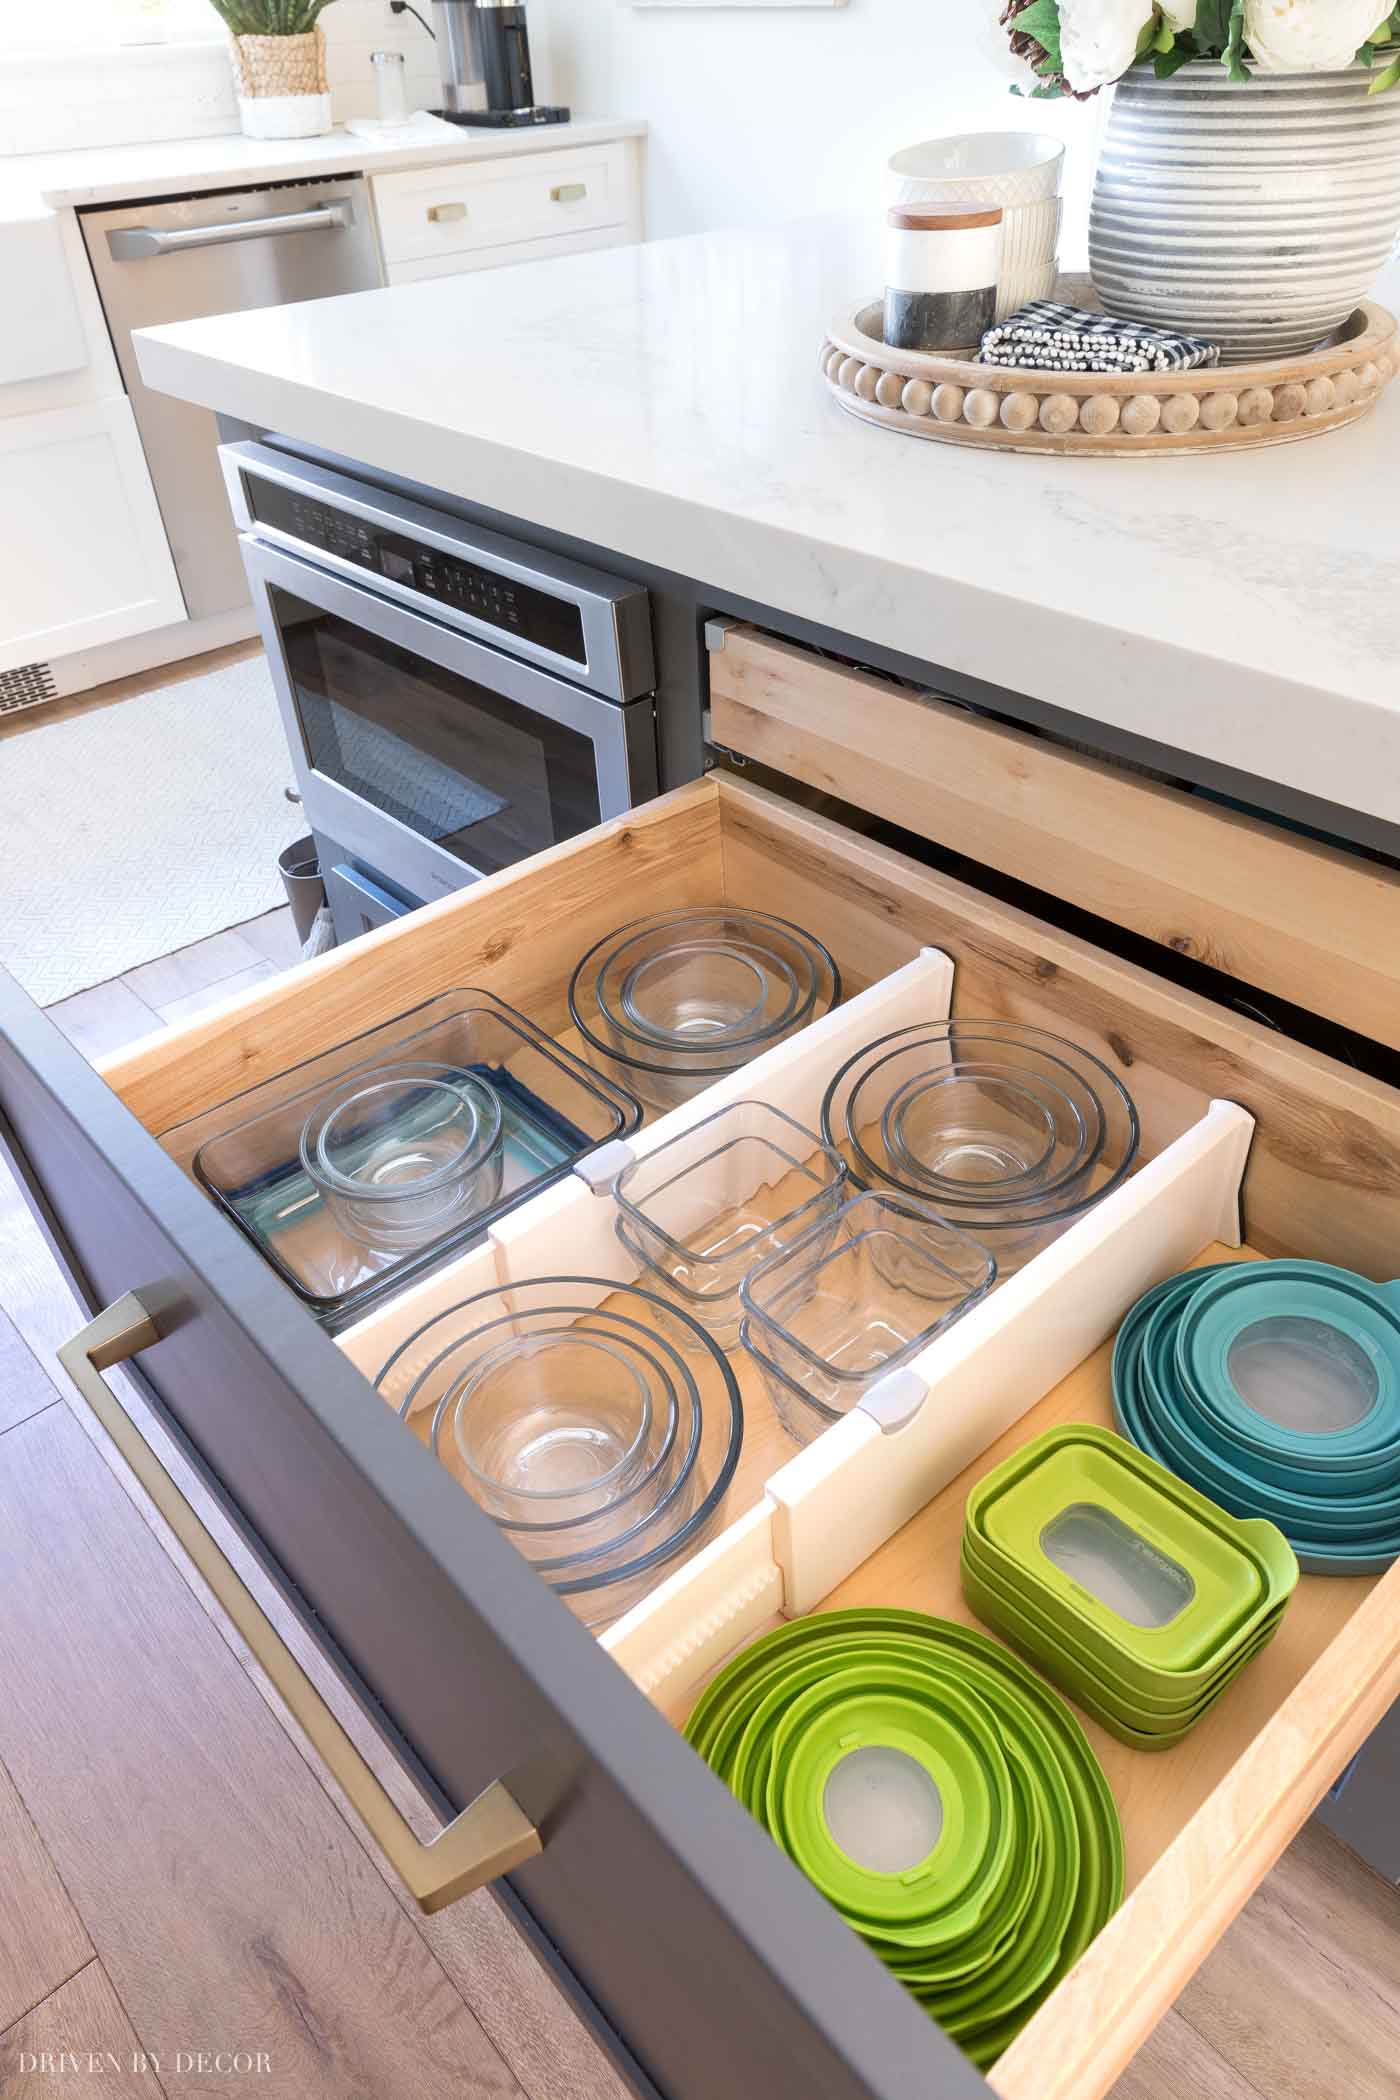 10 Kitchen Cabinet Organization Ideas - Driven by Decor